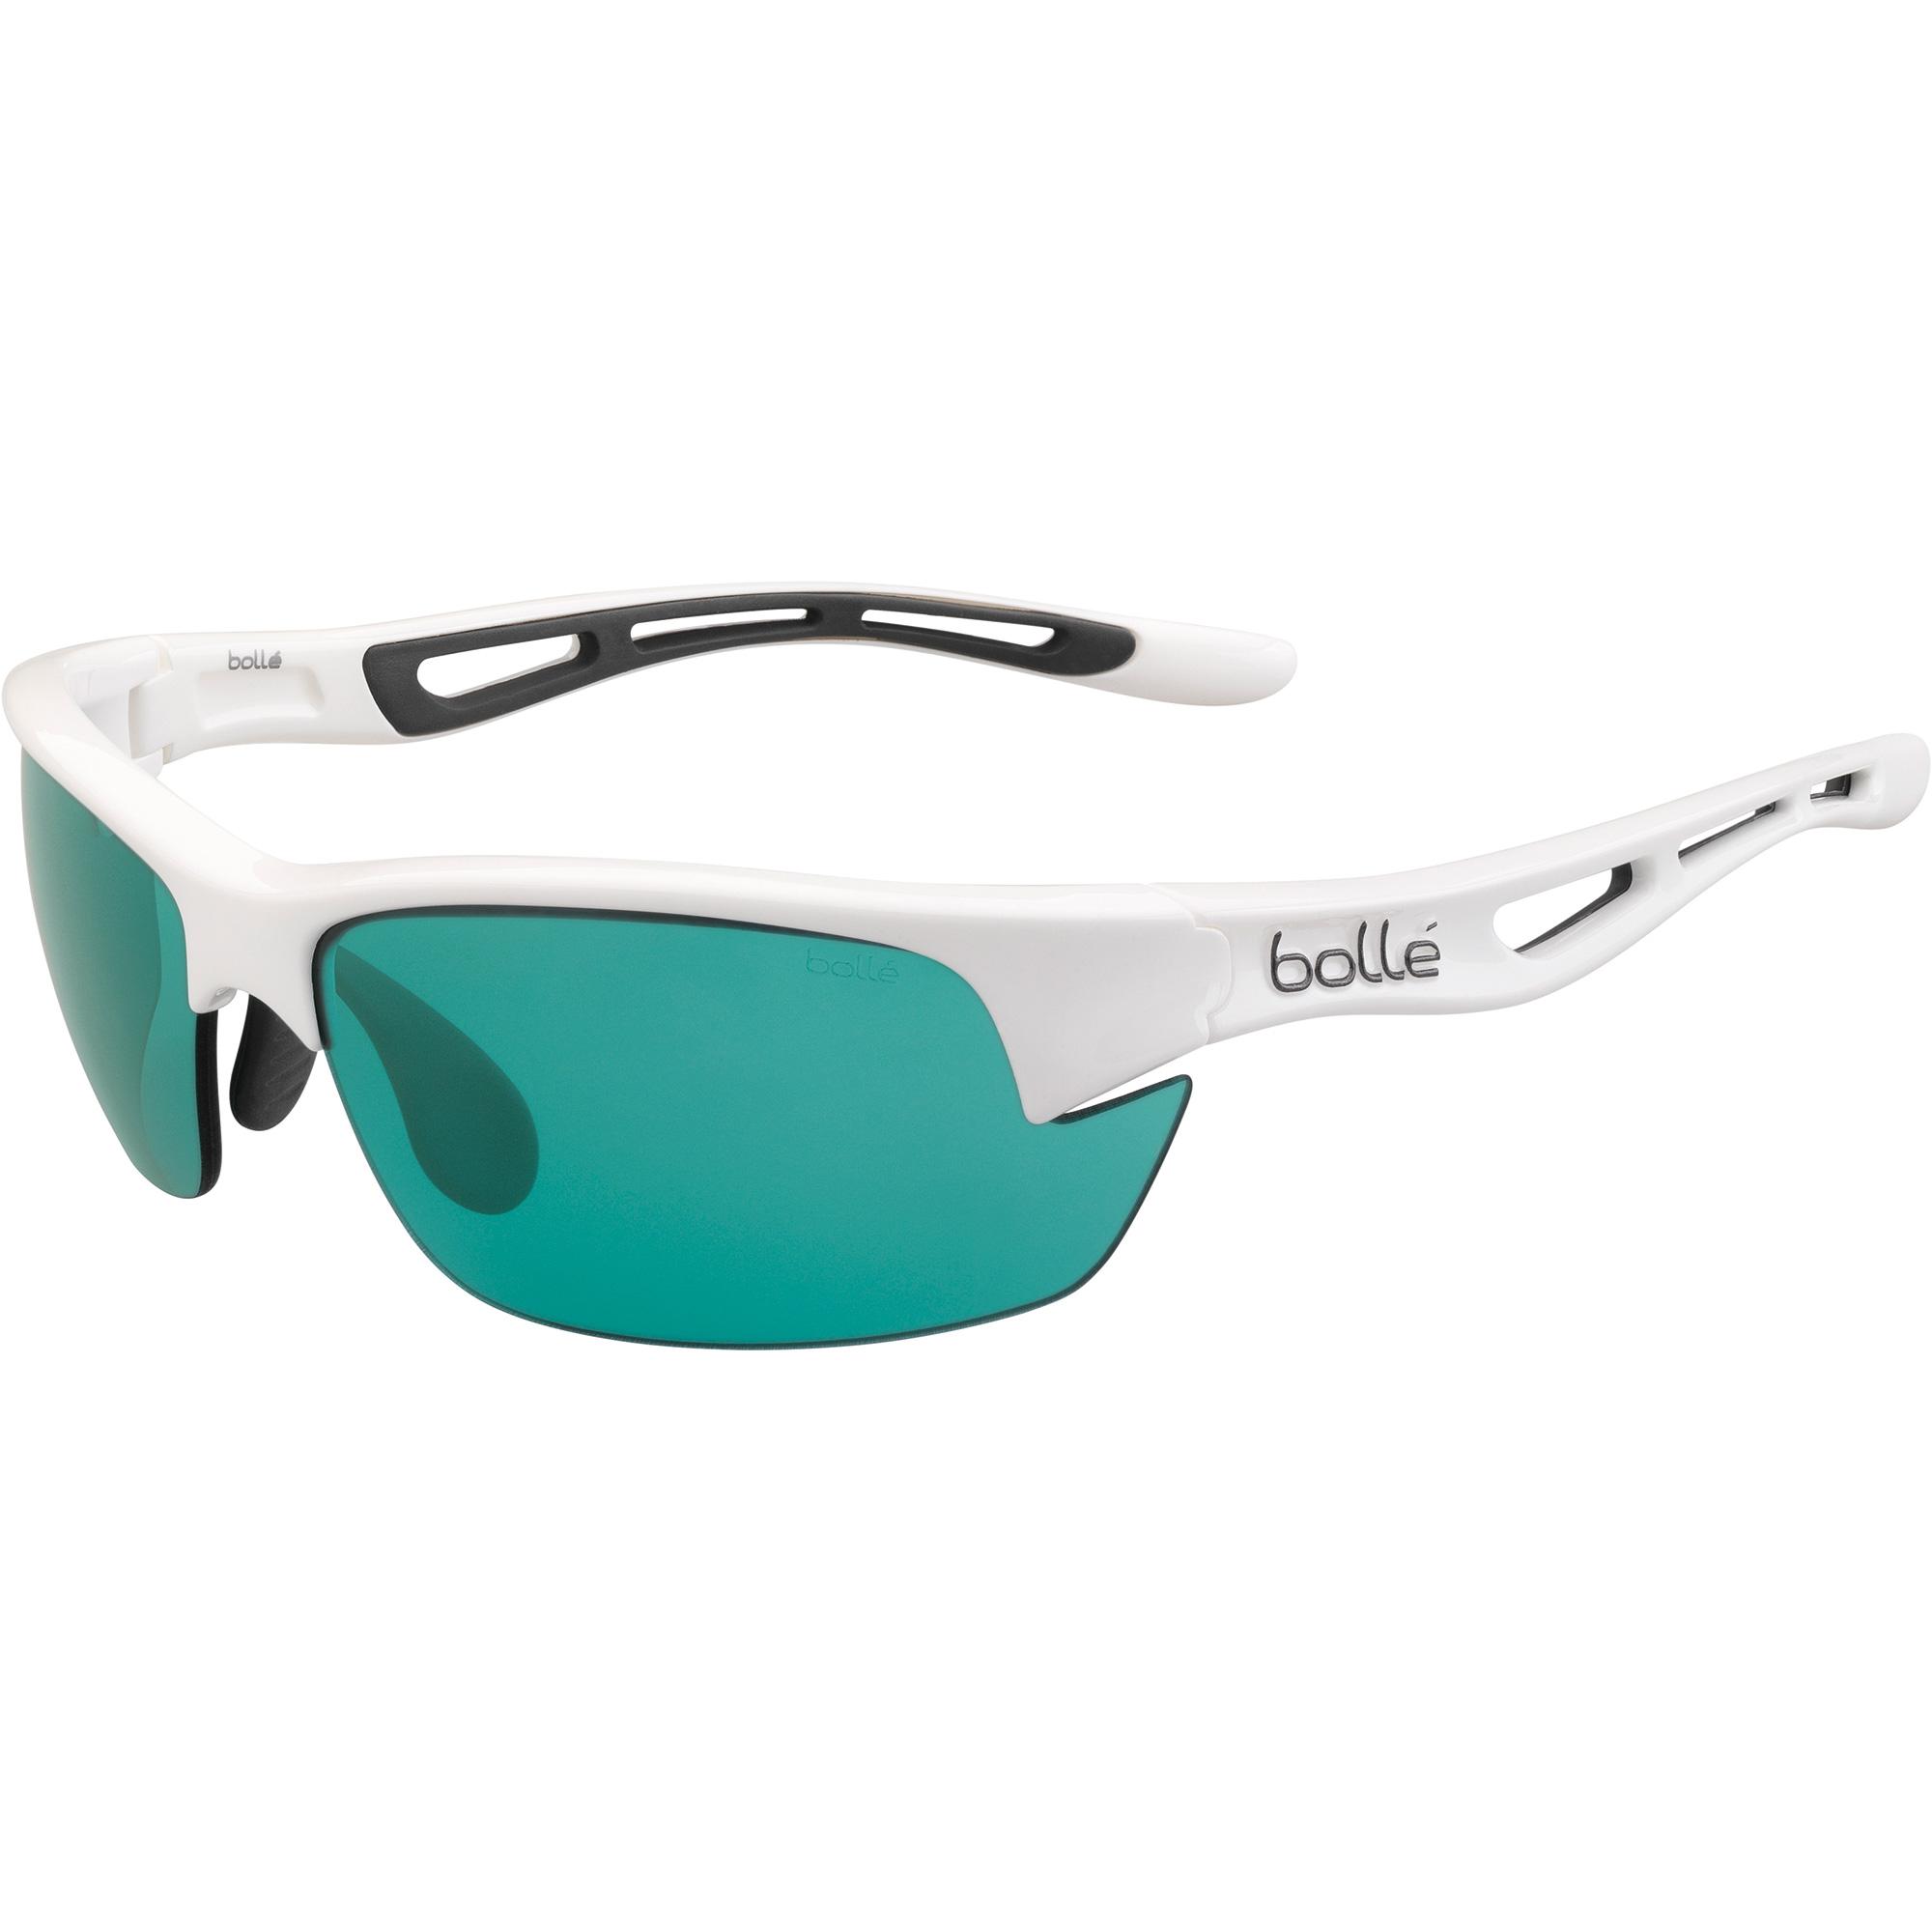 Bolle Bolt S Sunglasses 12013 | lupon.gov.ph